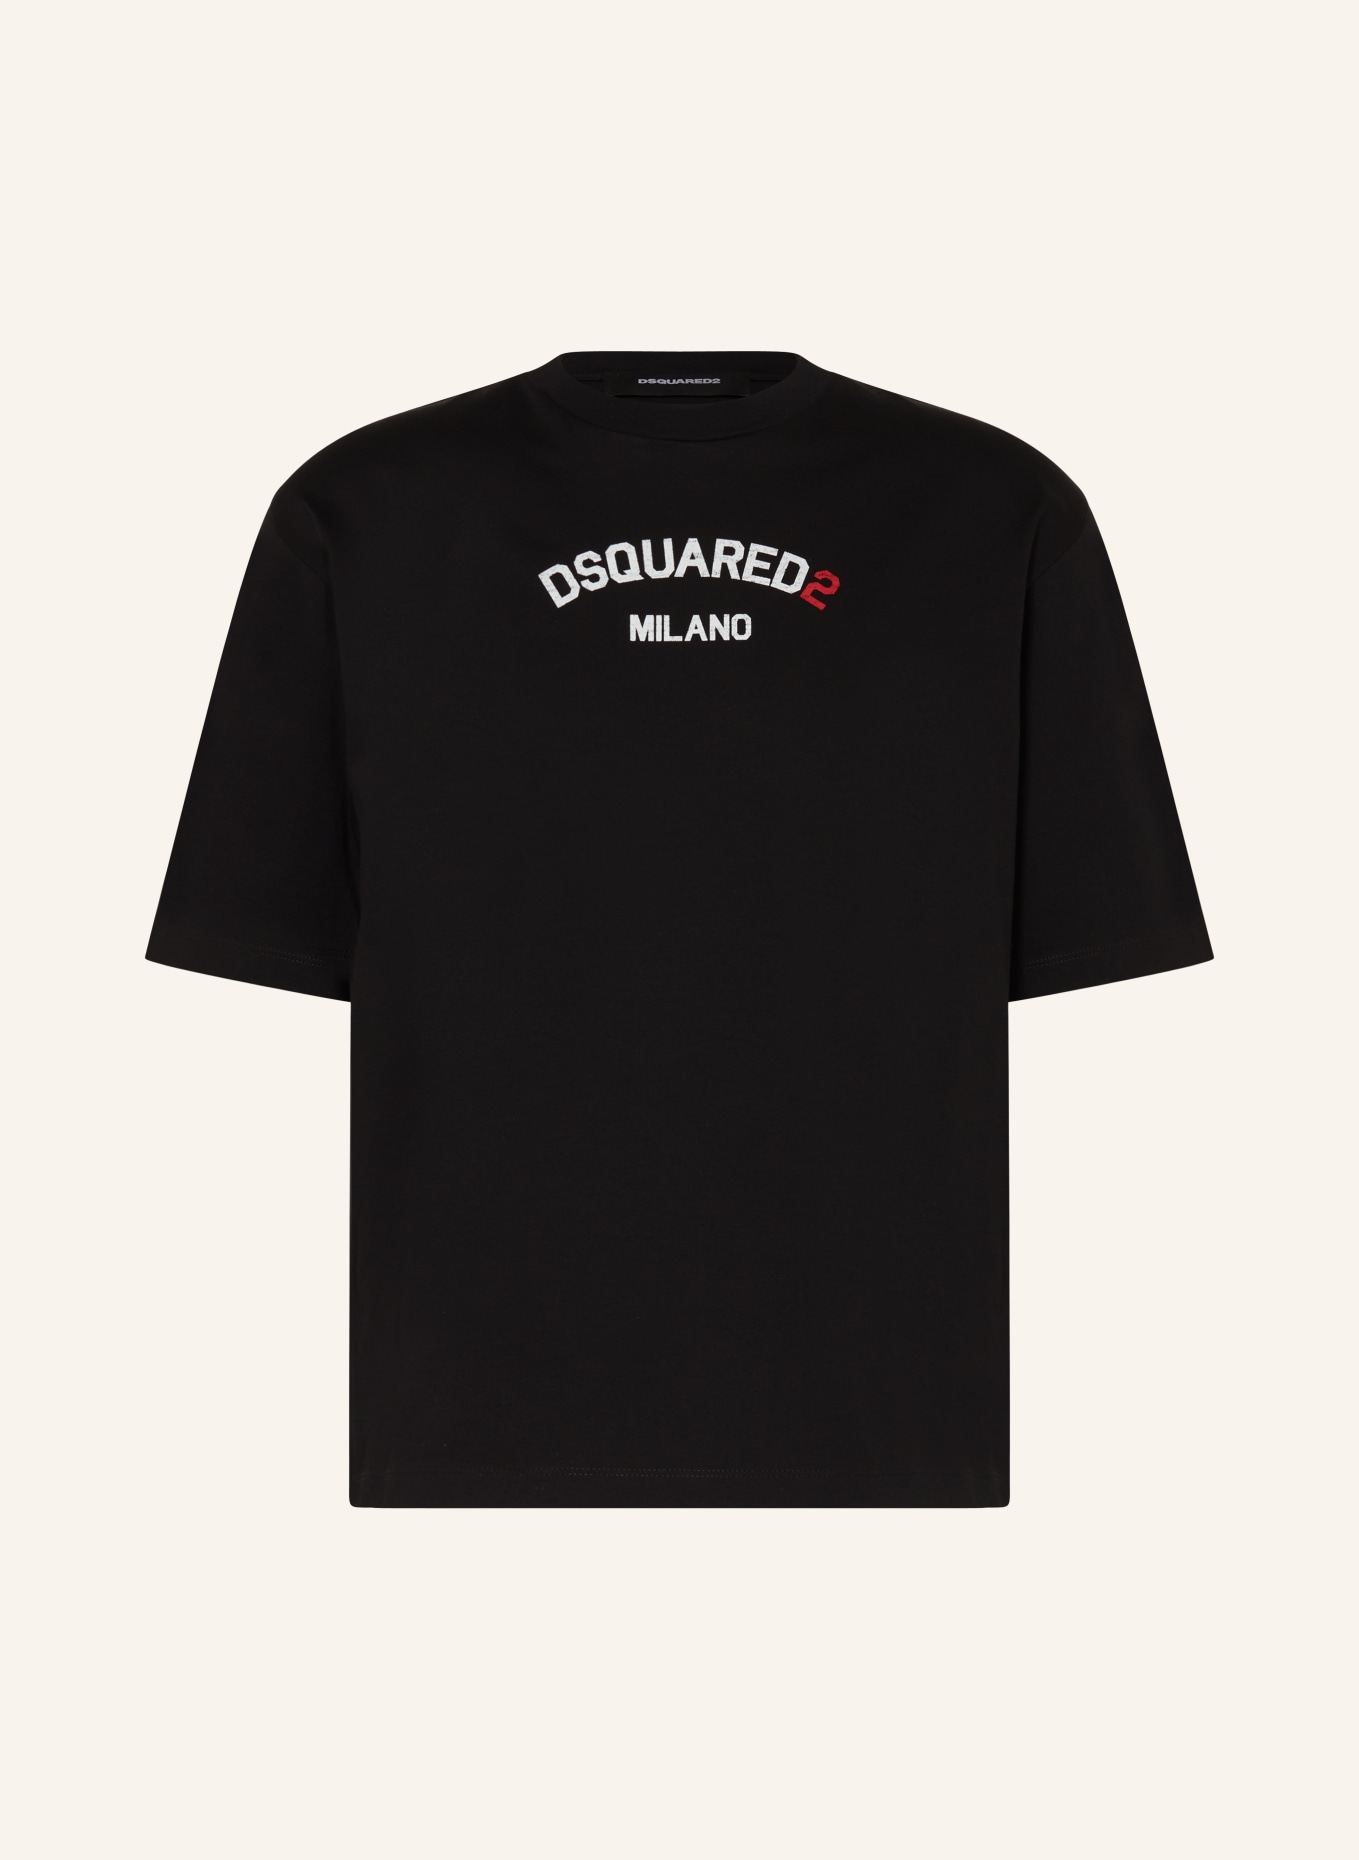 DSQUARED2 T-Shirt MILANO, Farbe: SCHWARZ/ WEISS (Bild 1)